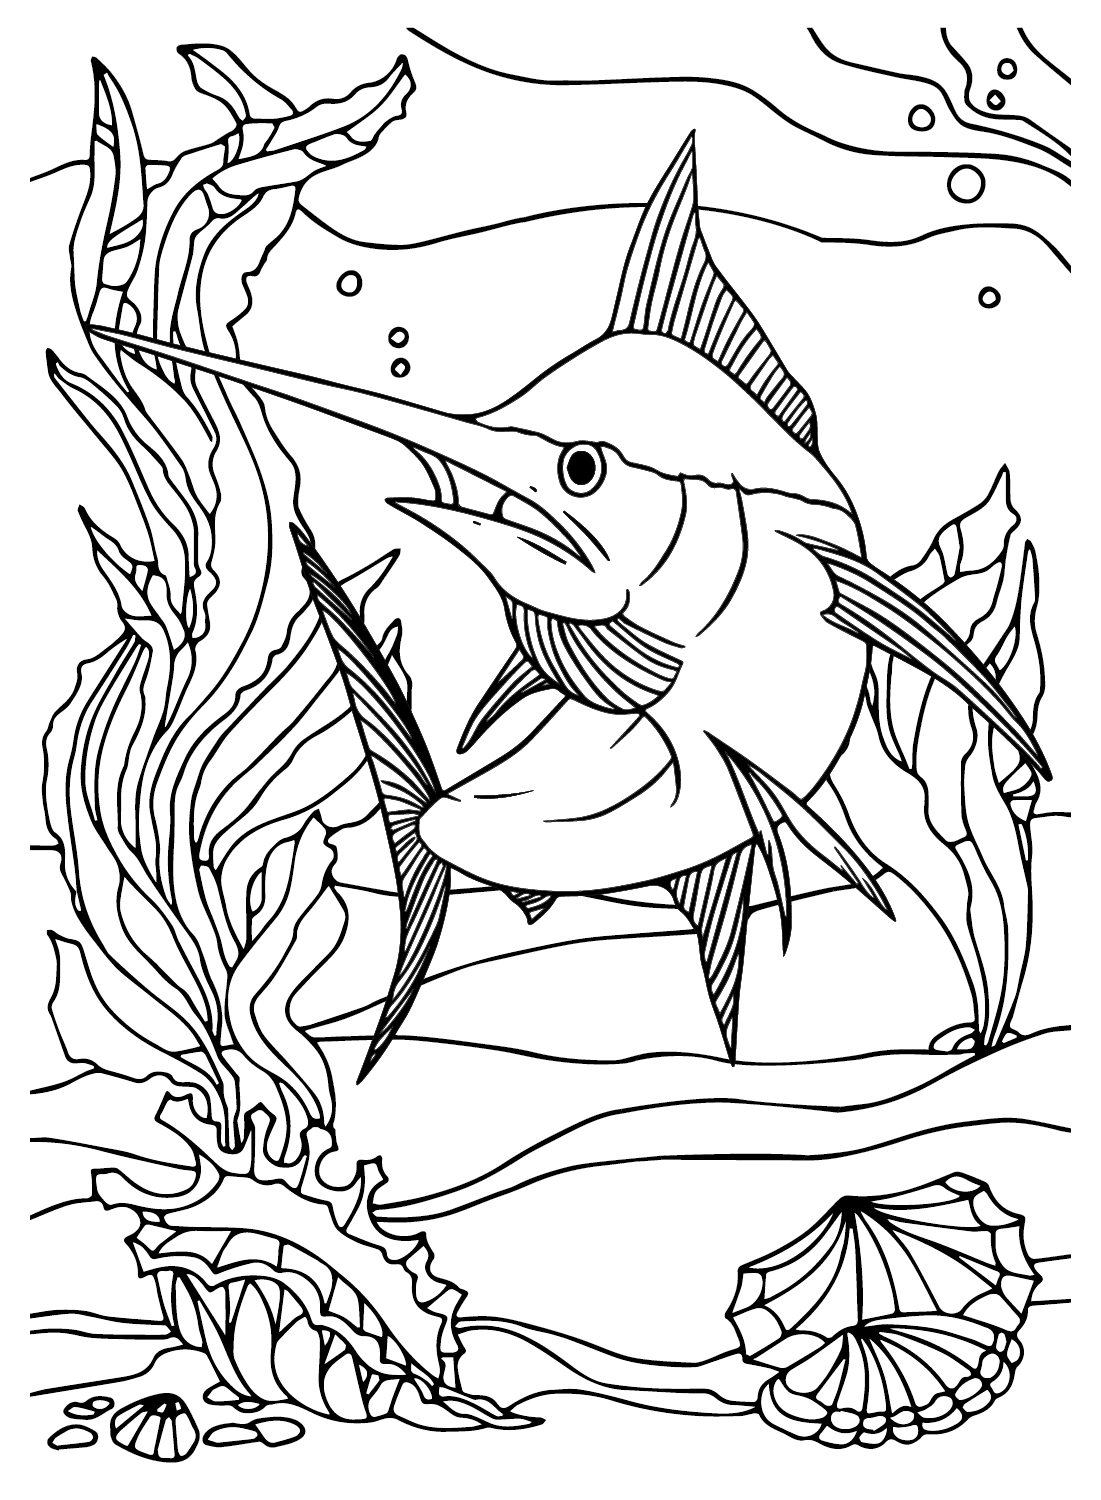 O Peixe Espadarte de Peixe Espada